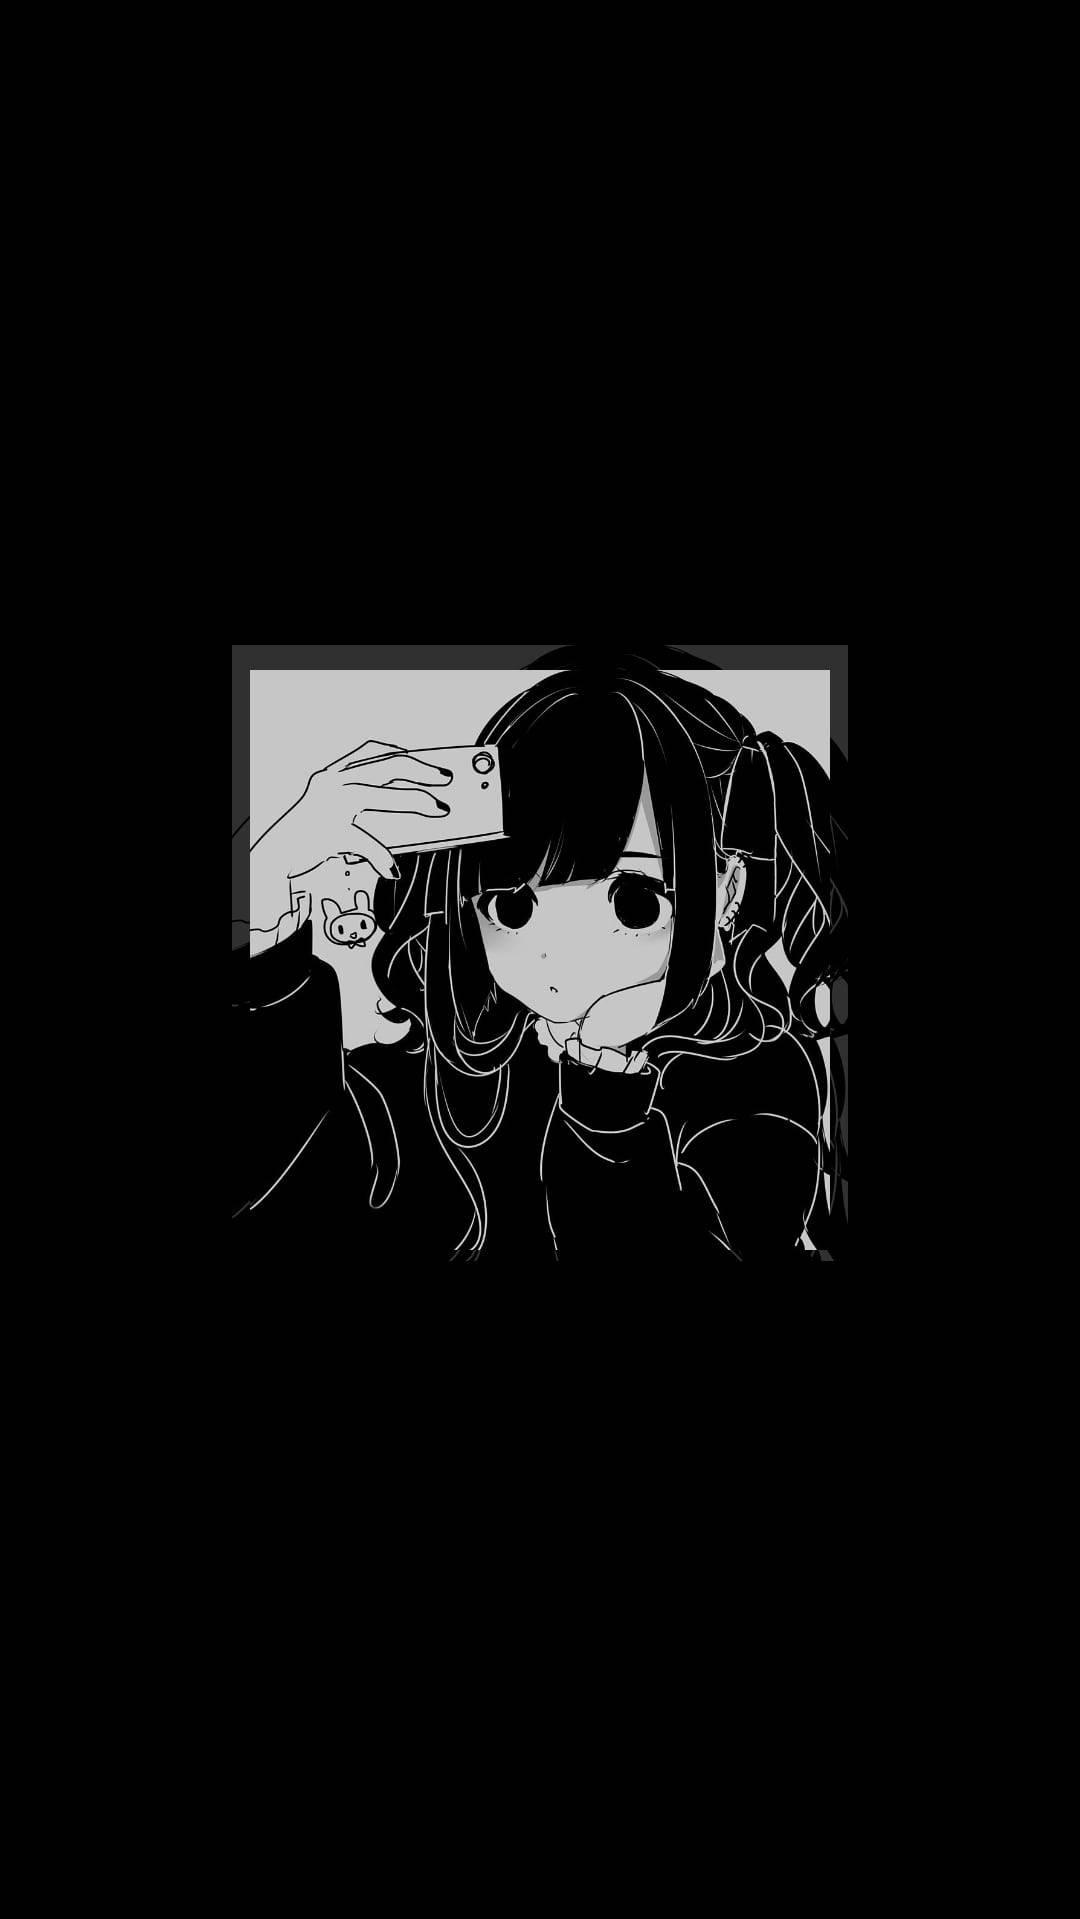 Simple Sad Anime Girl Black And White Wallpaper